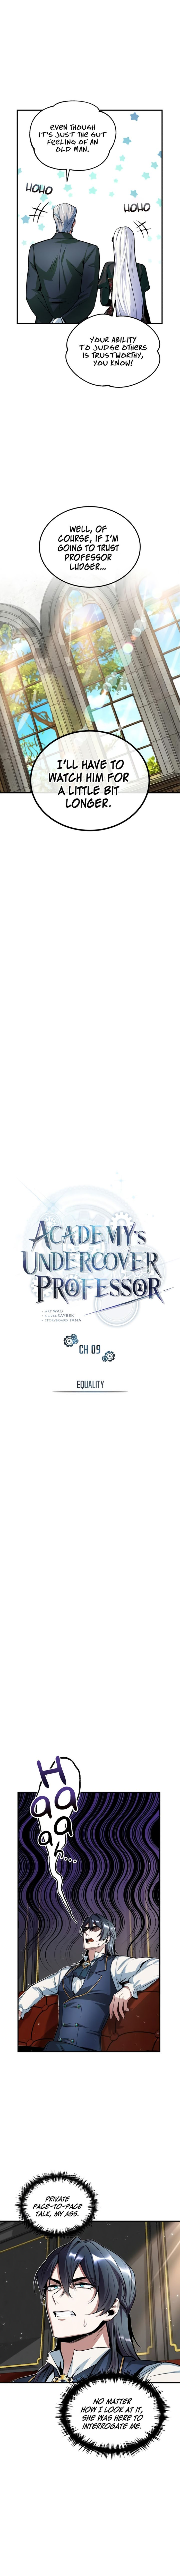 Academys Undercover Professor 9 3